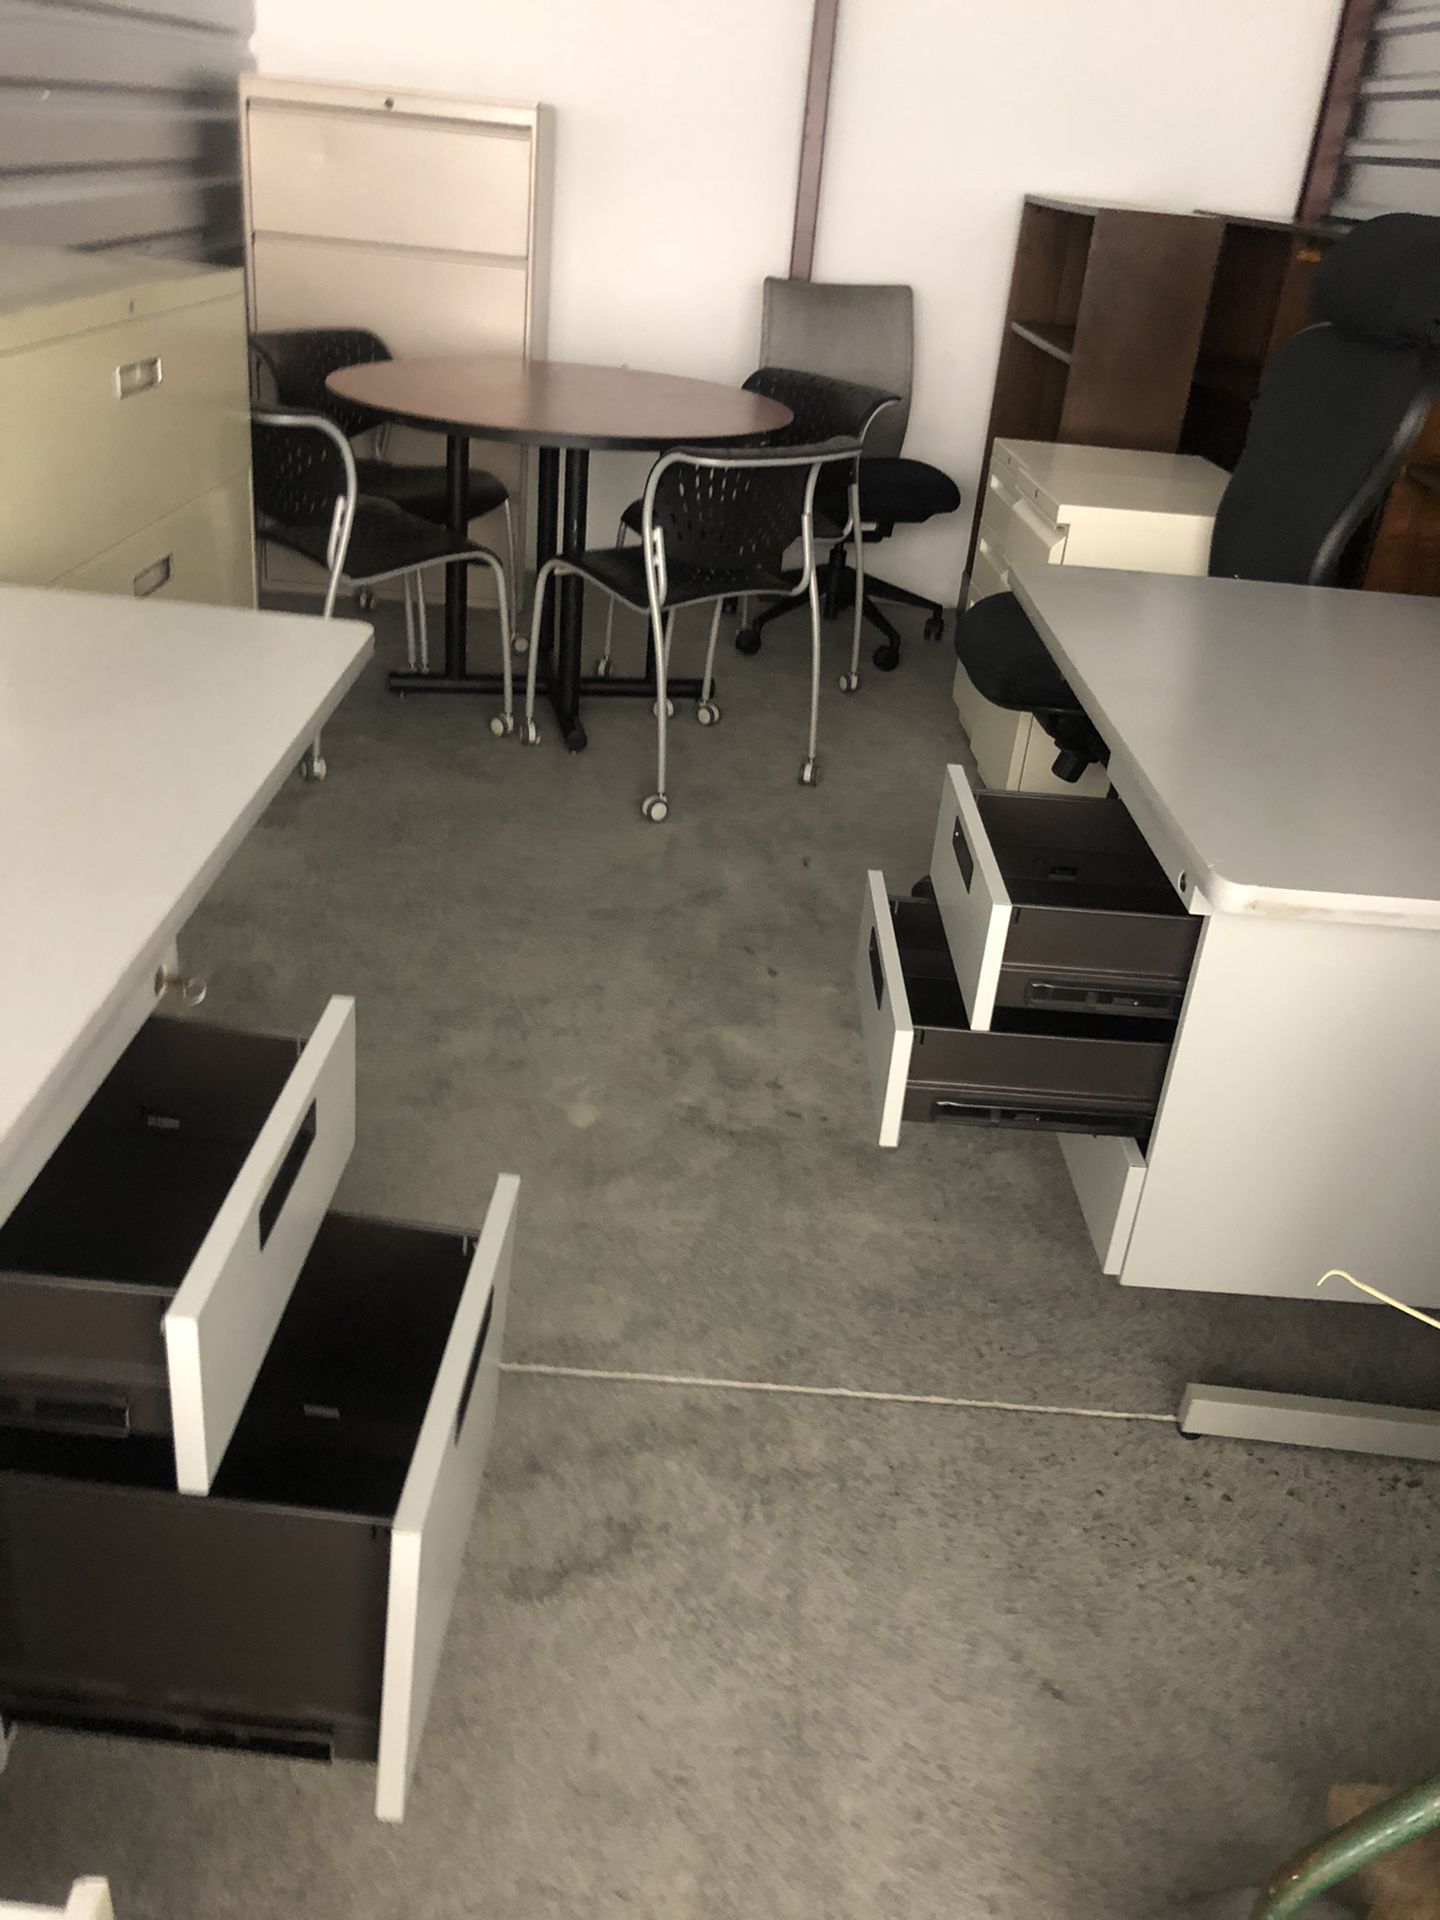 3 students desks in good condition 48x30x 29 price per one desk